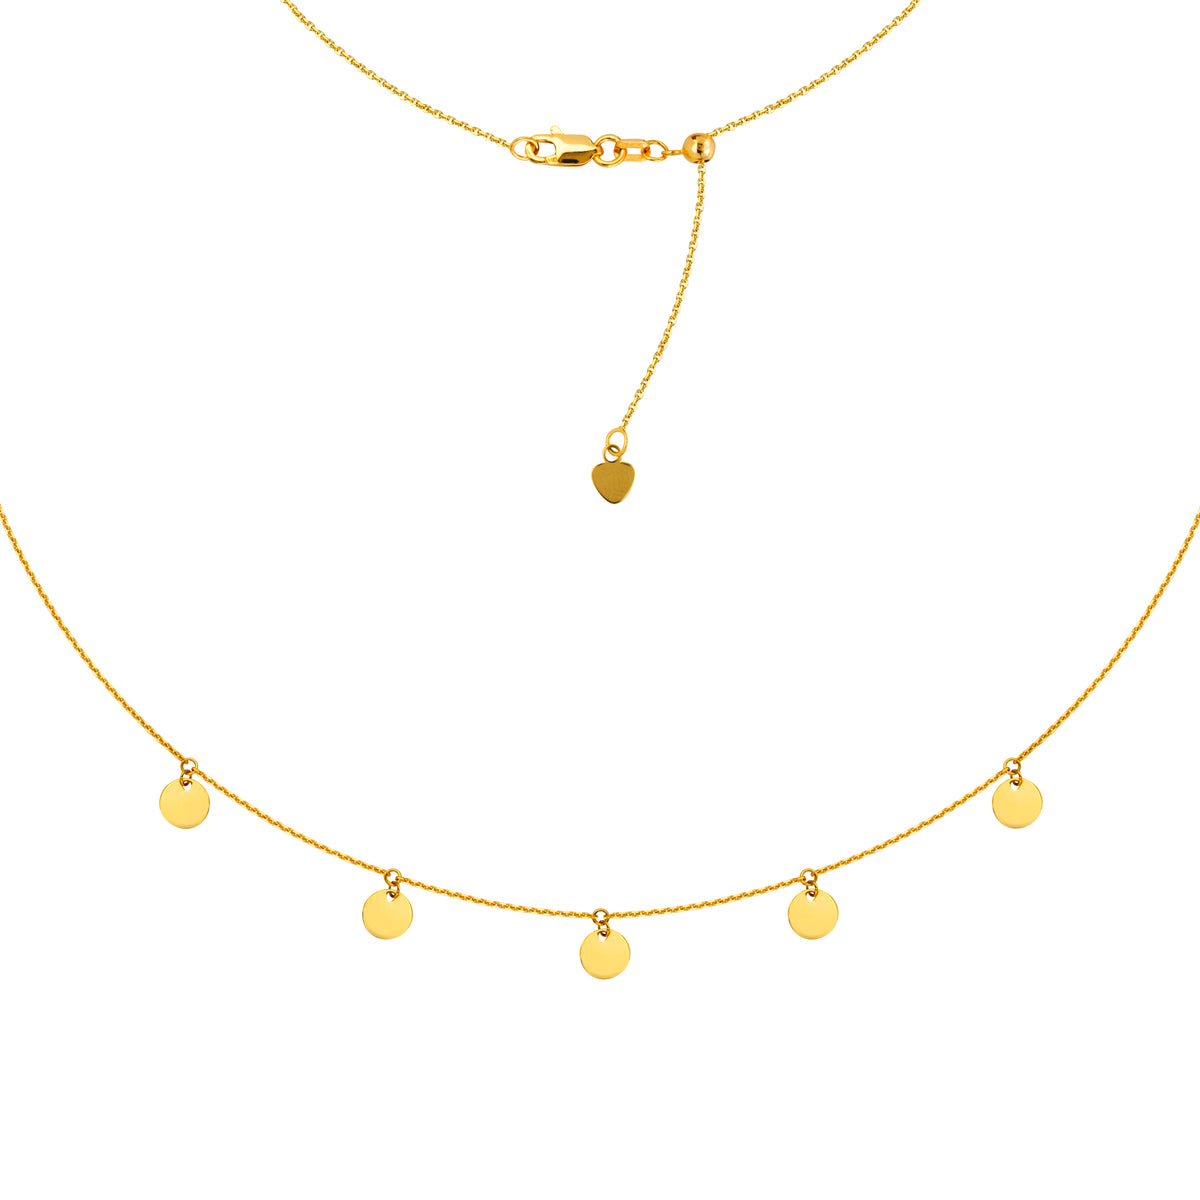 5 Dangle Mini Disc Choker 14k Gold Necklace, 16" Adjustable fine designer jewelry for men and women